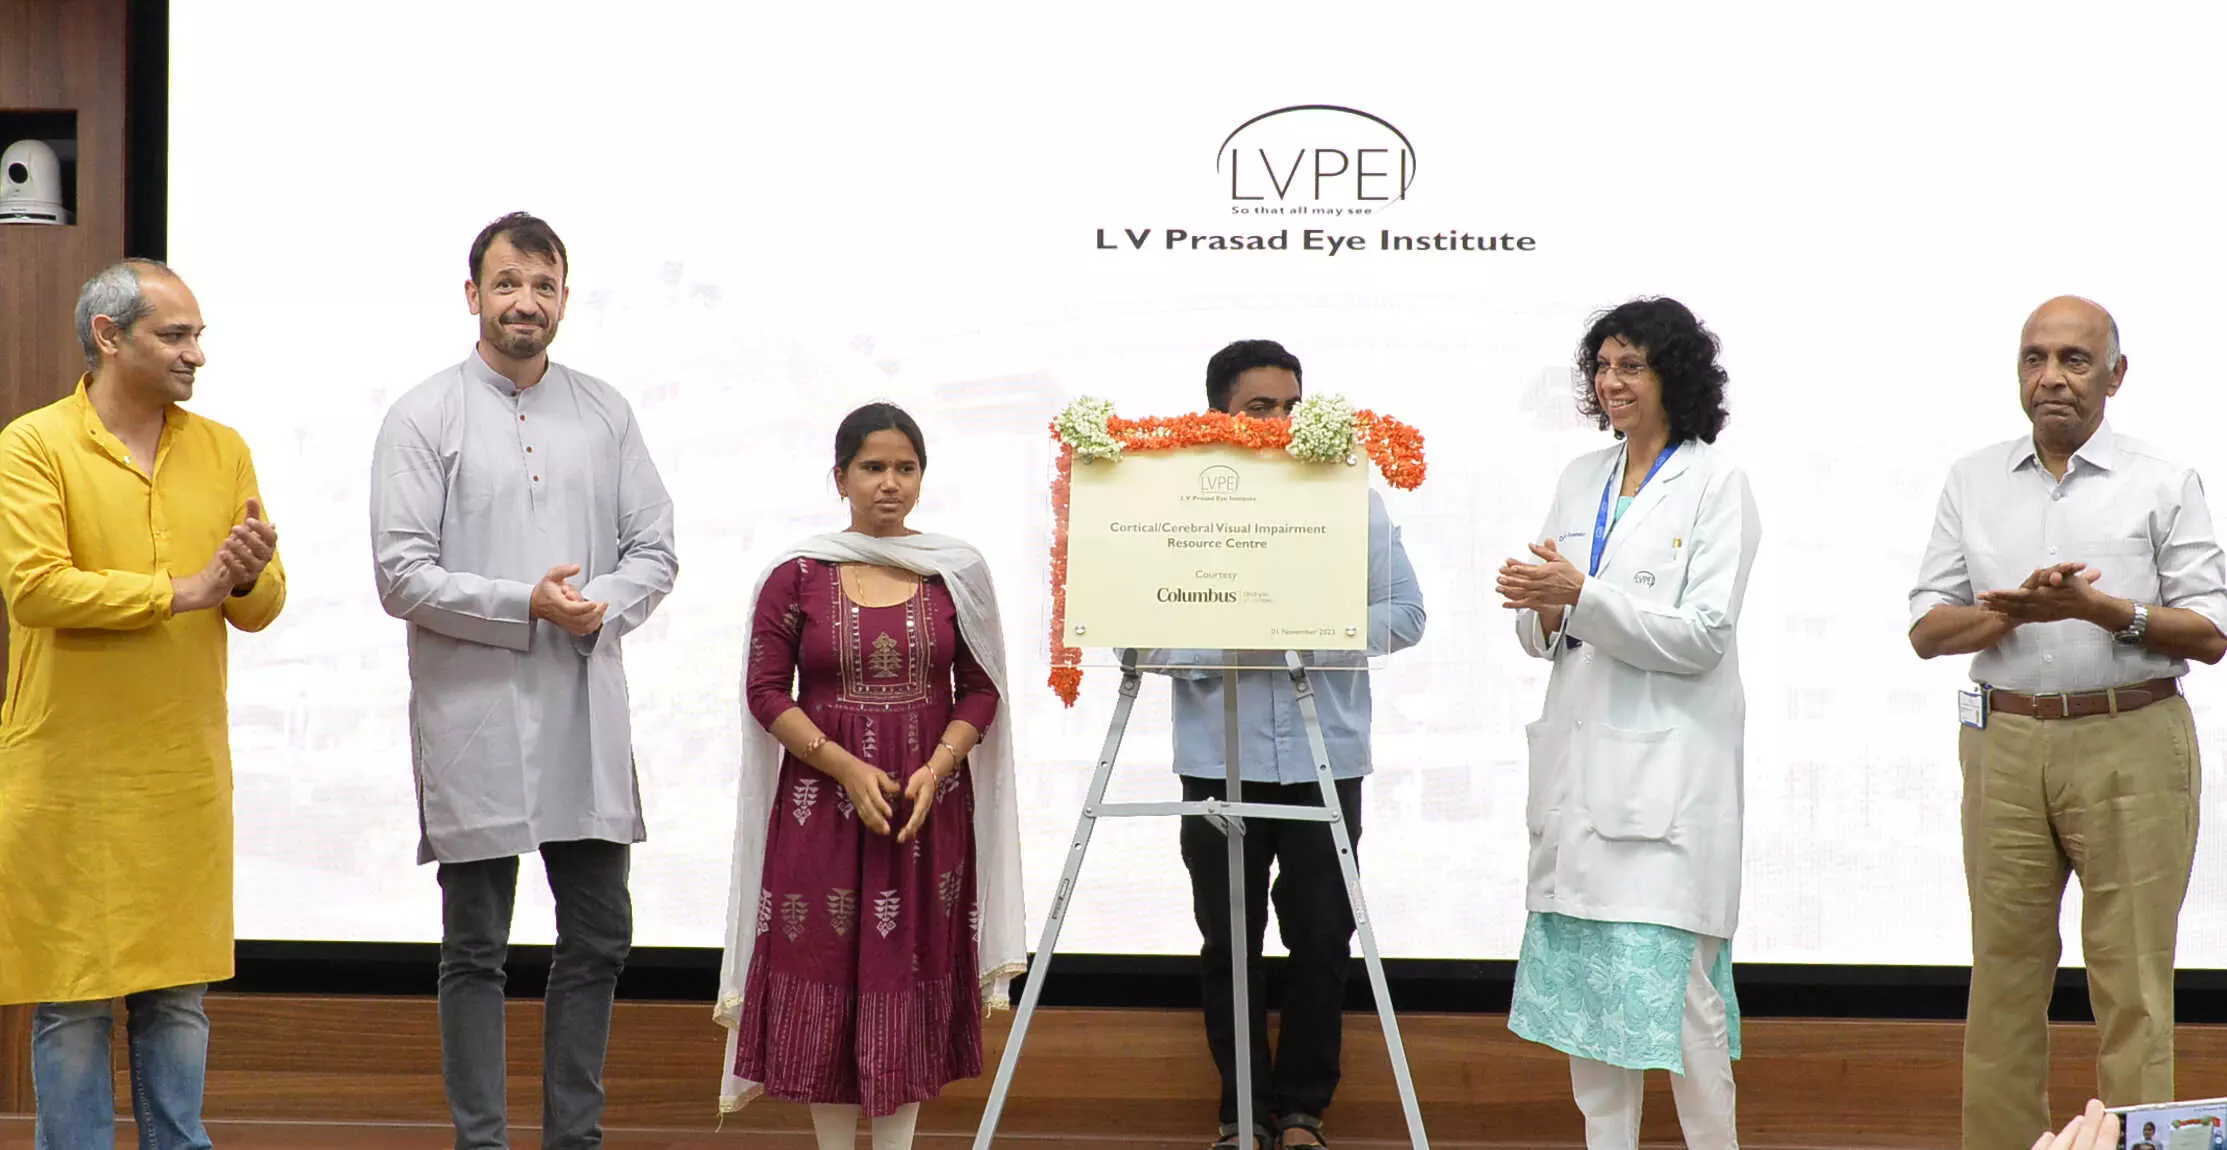 LVPEI inaugurates cortical, cerebral visual impairment resource centre in Hyderabad